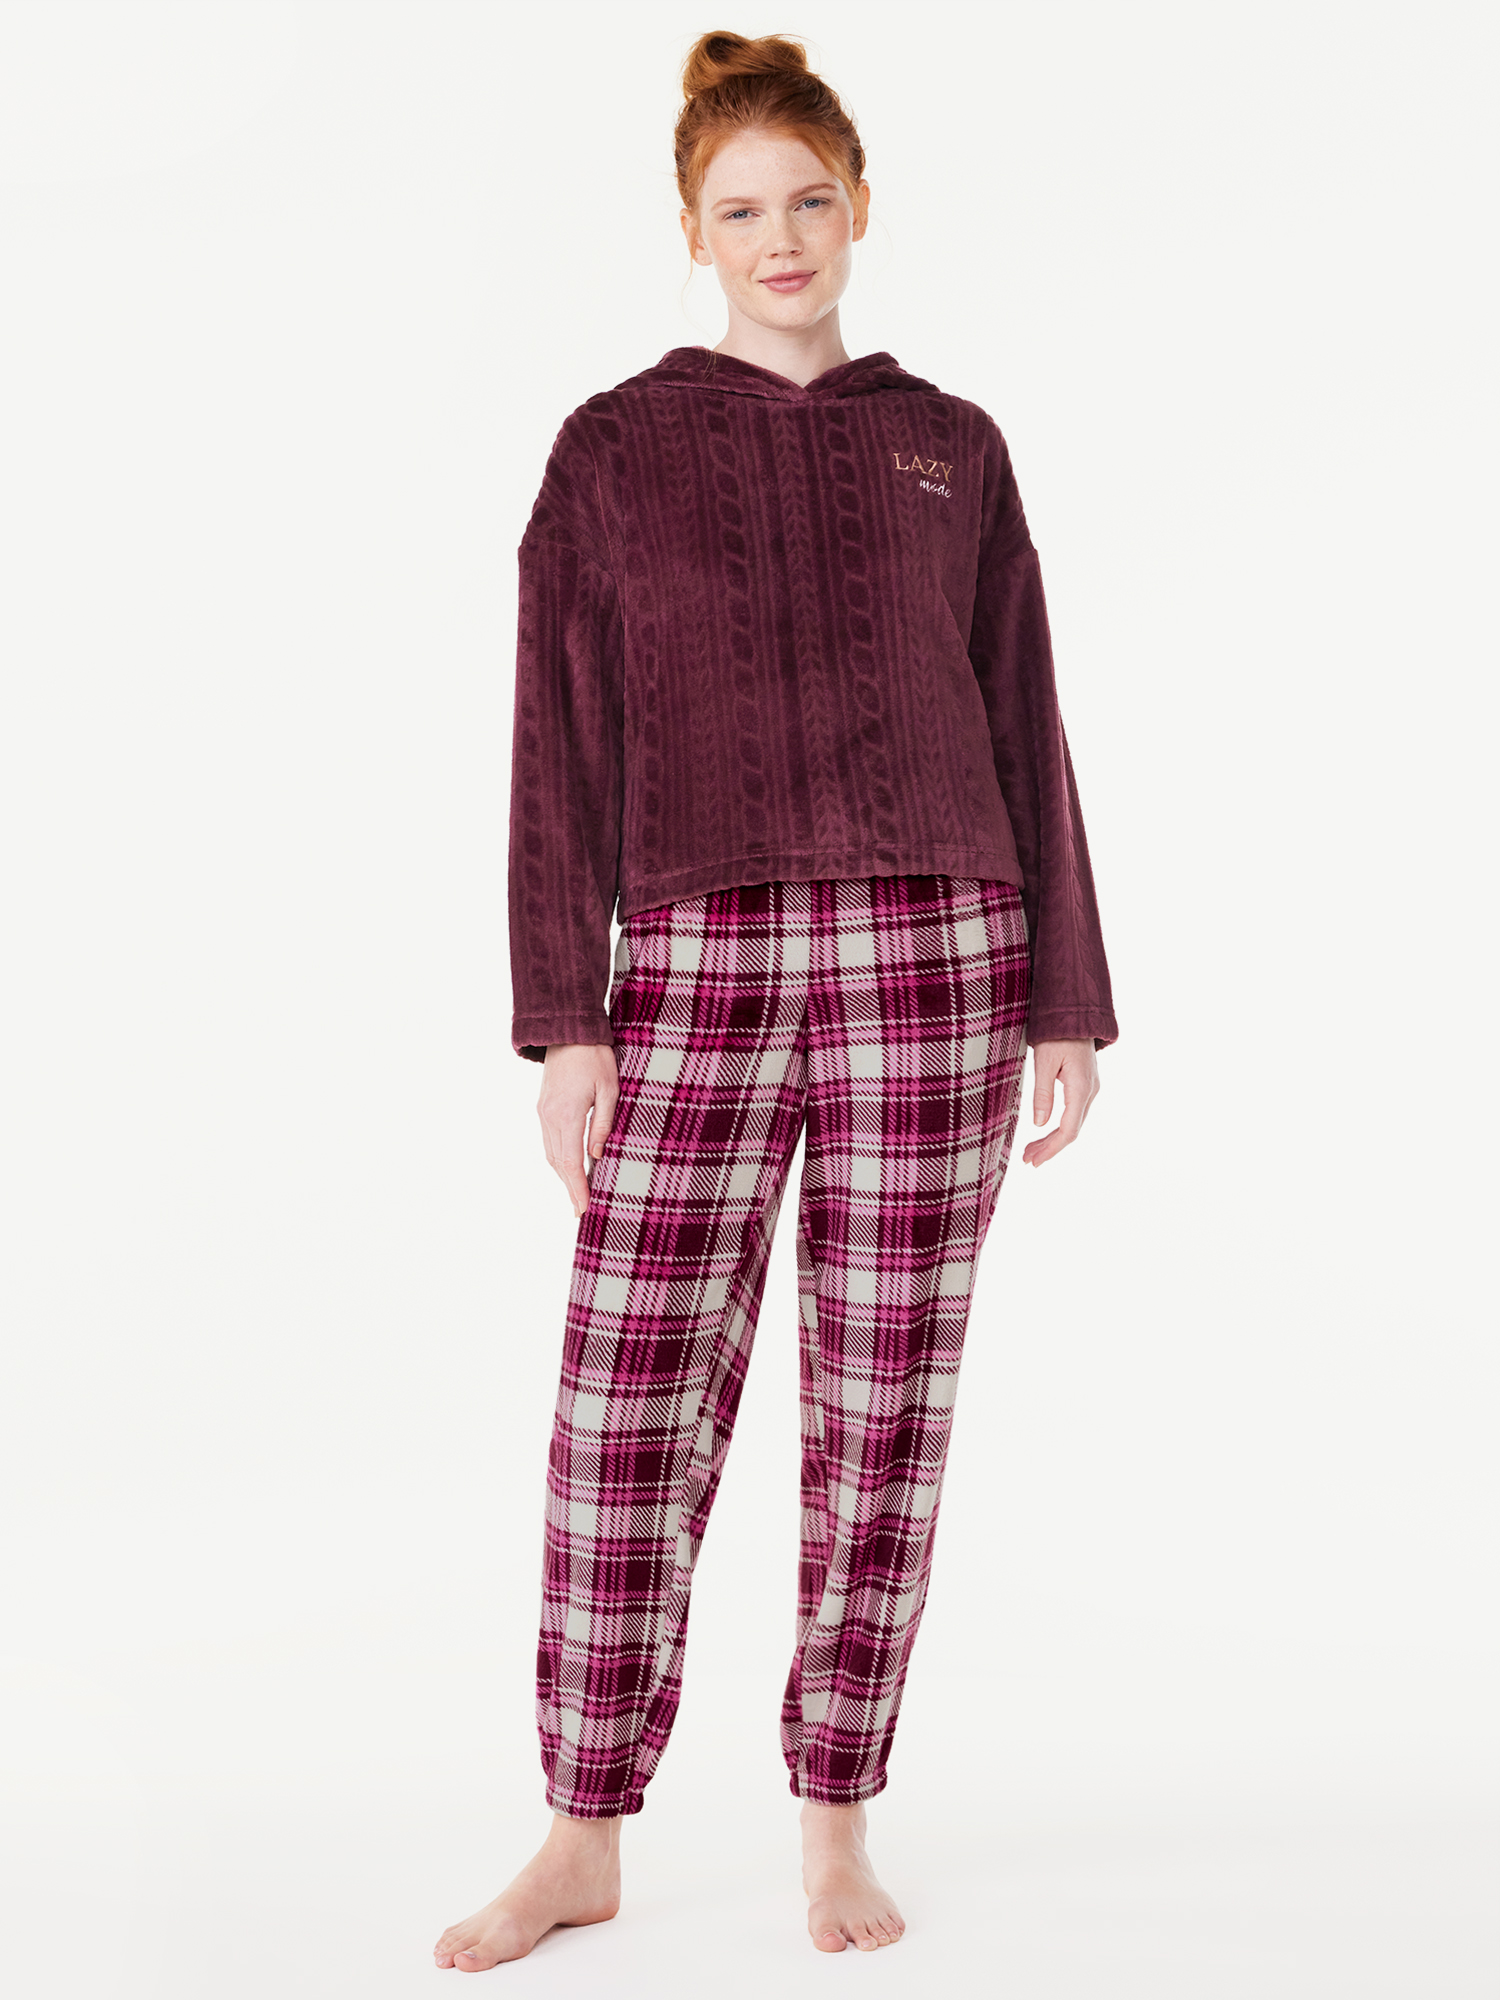 Joyspun Women’s Plush Hooded Top and Pants, 2-Piece Pajama Set, Sizes ...